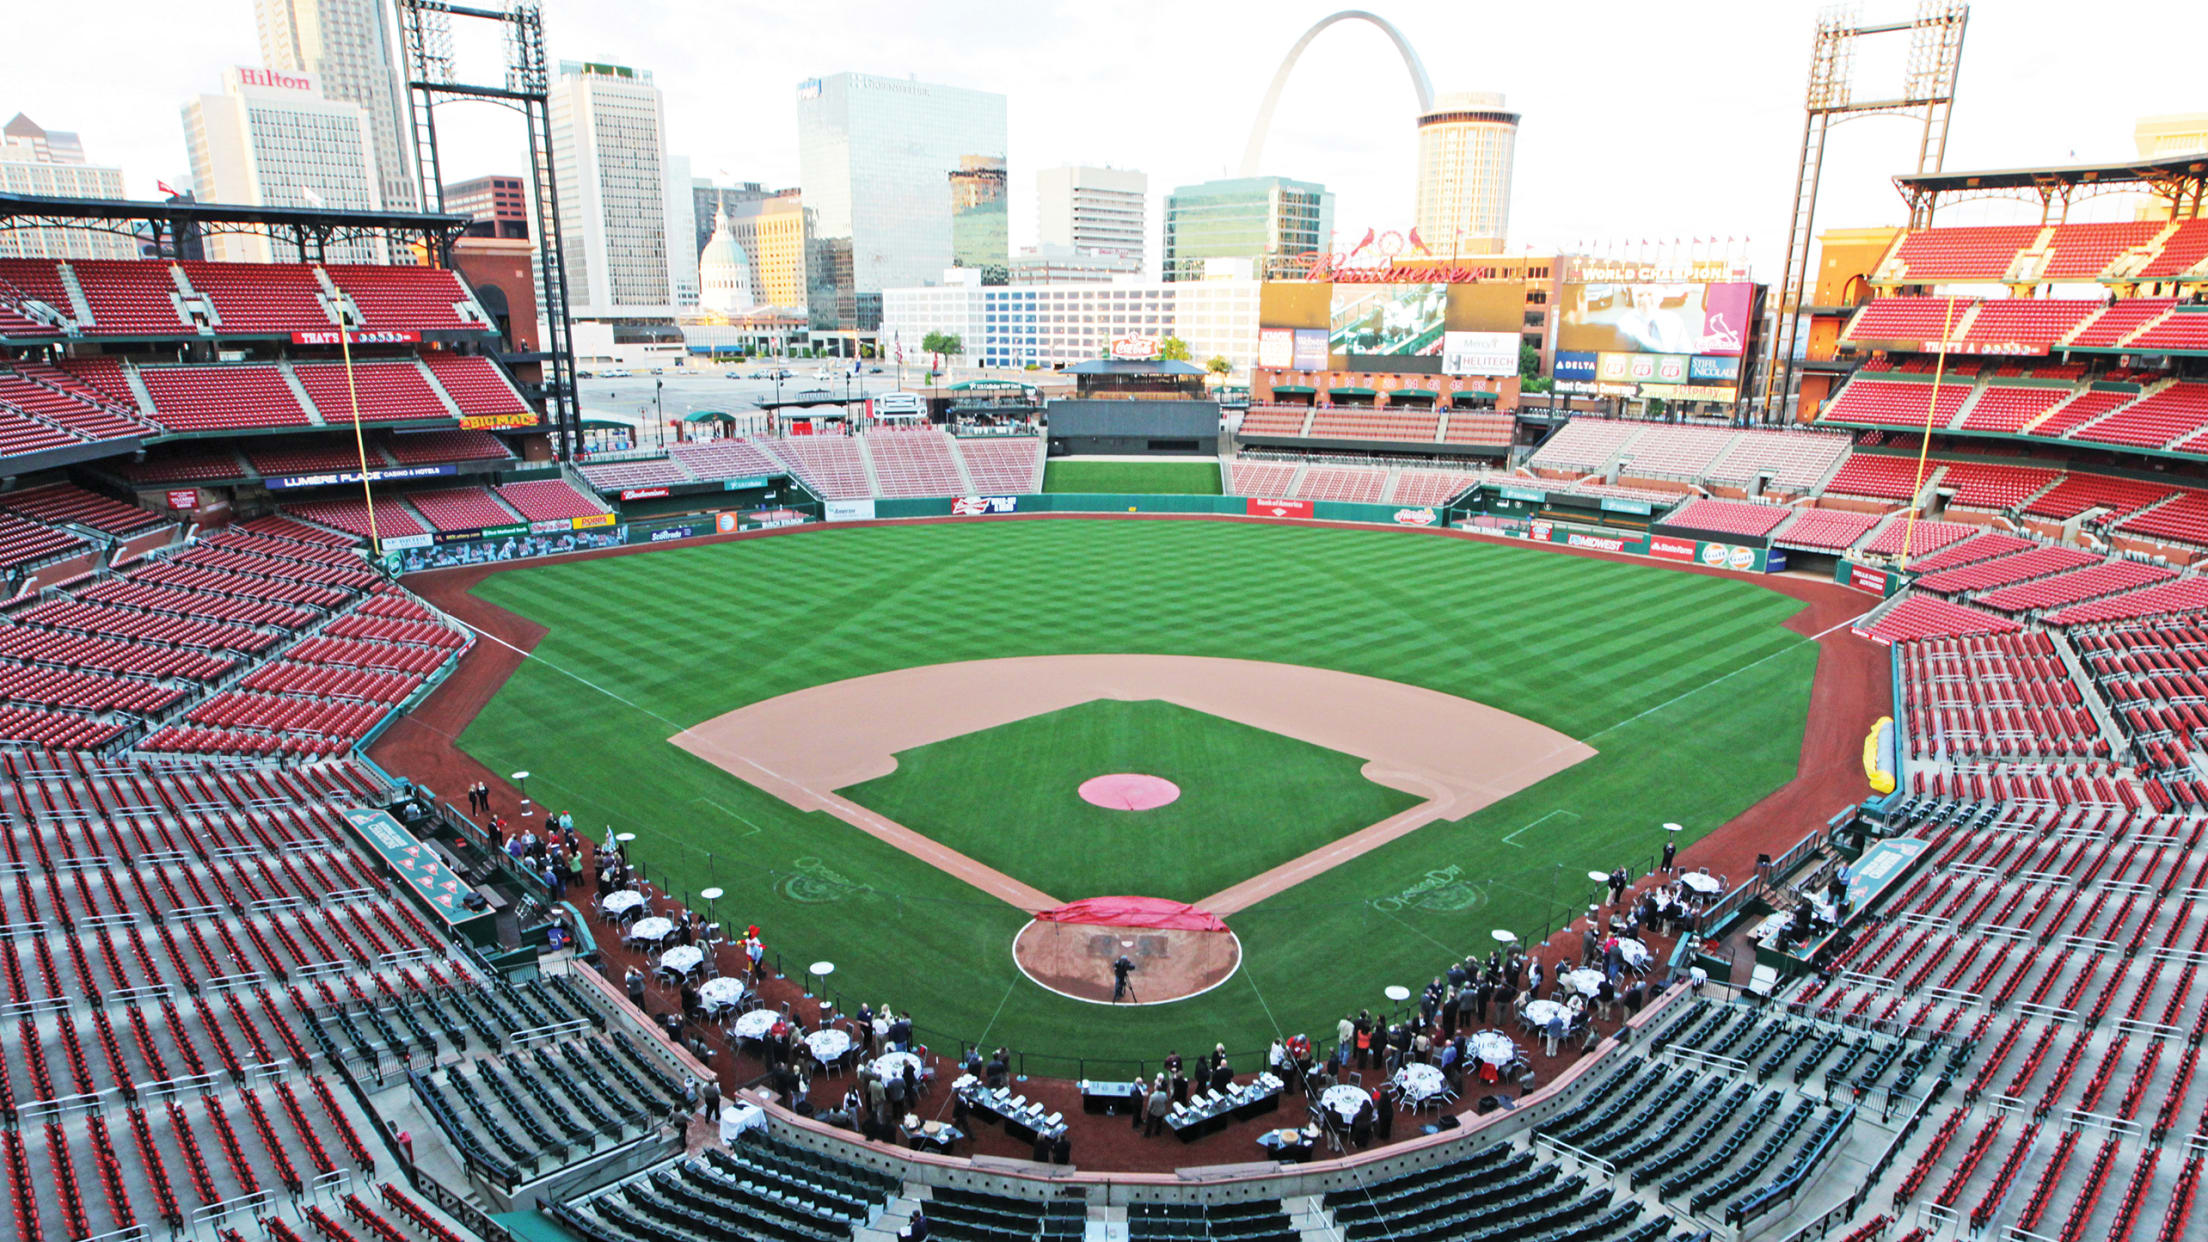 St. Louis Cardinals - A Day at the Ballpark!